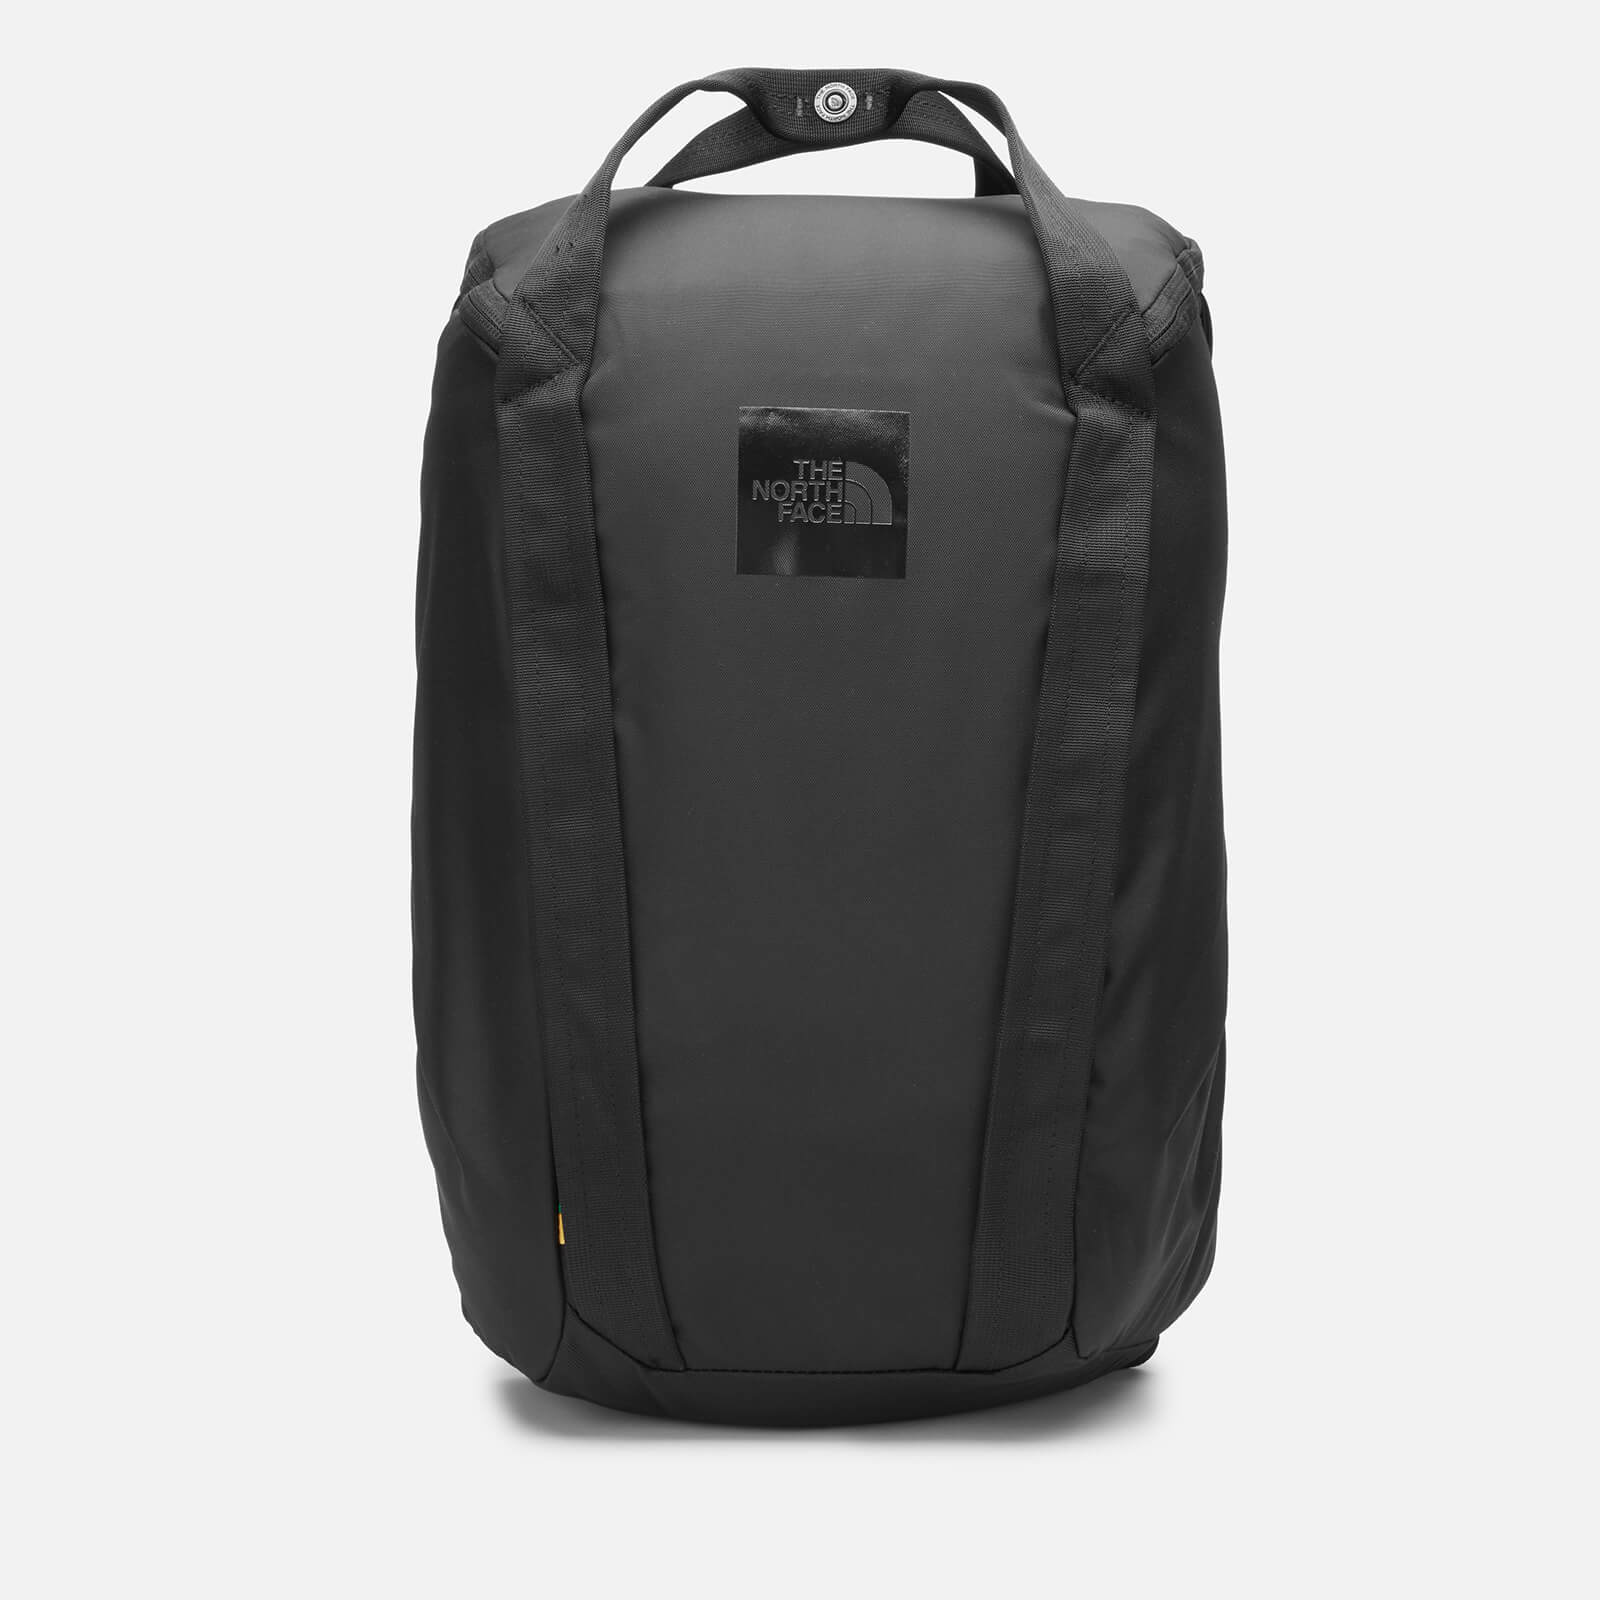 instigator 20 backpack review